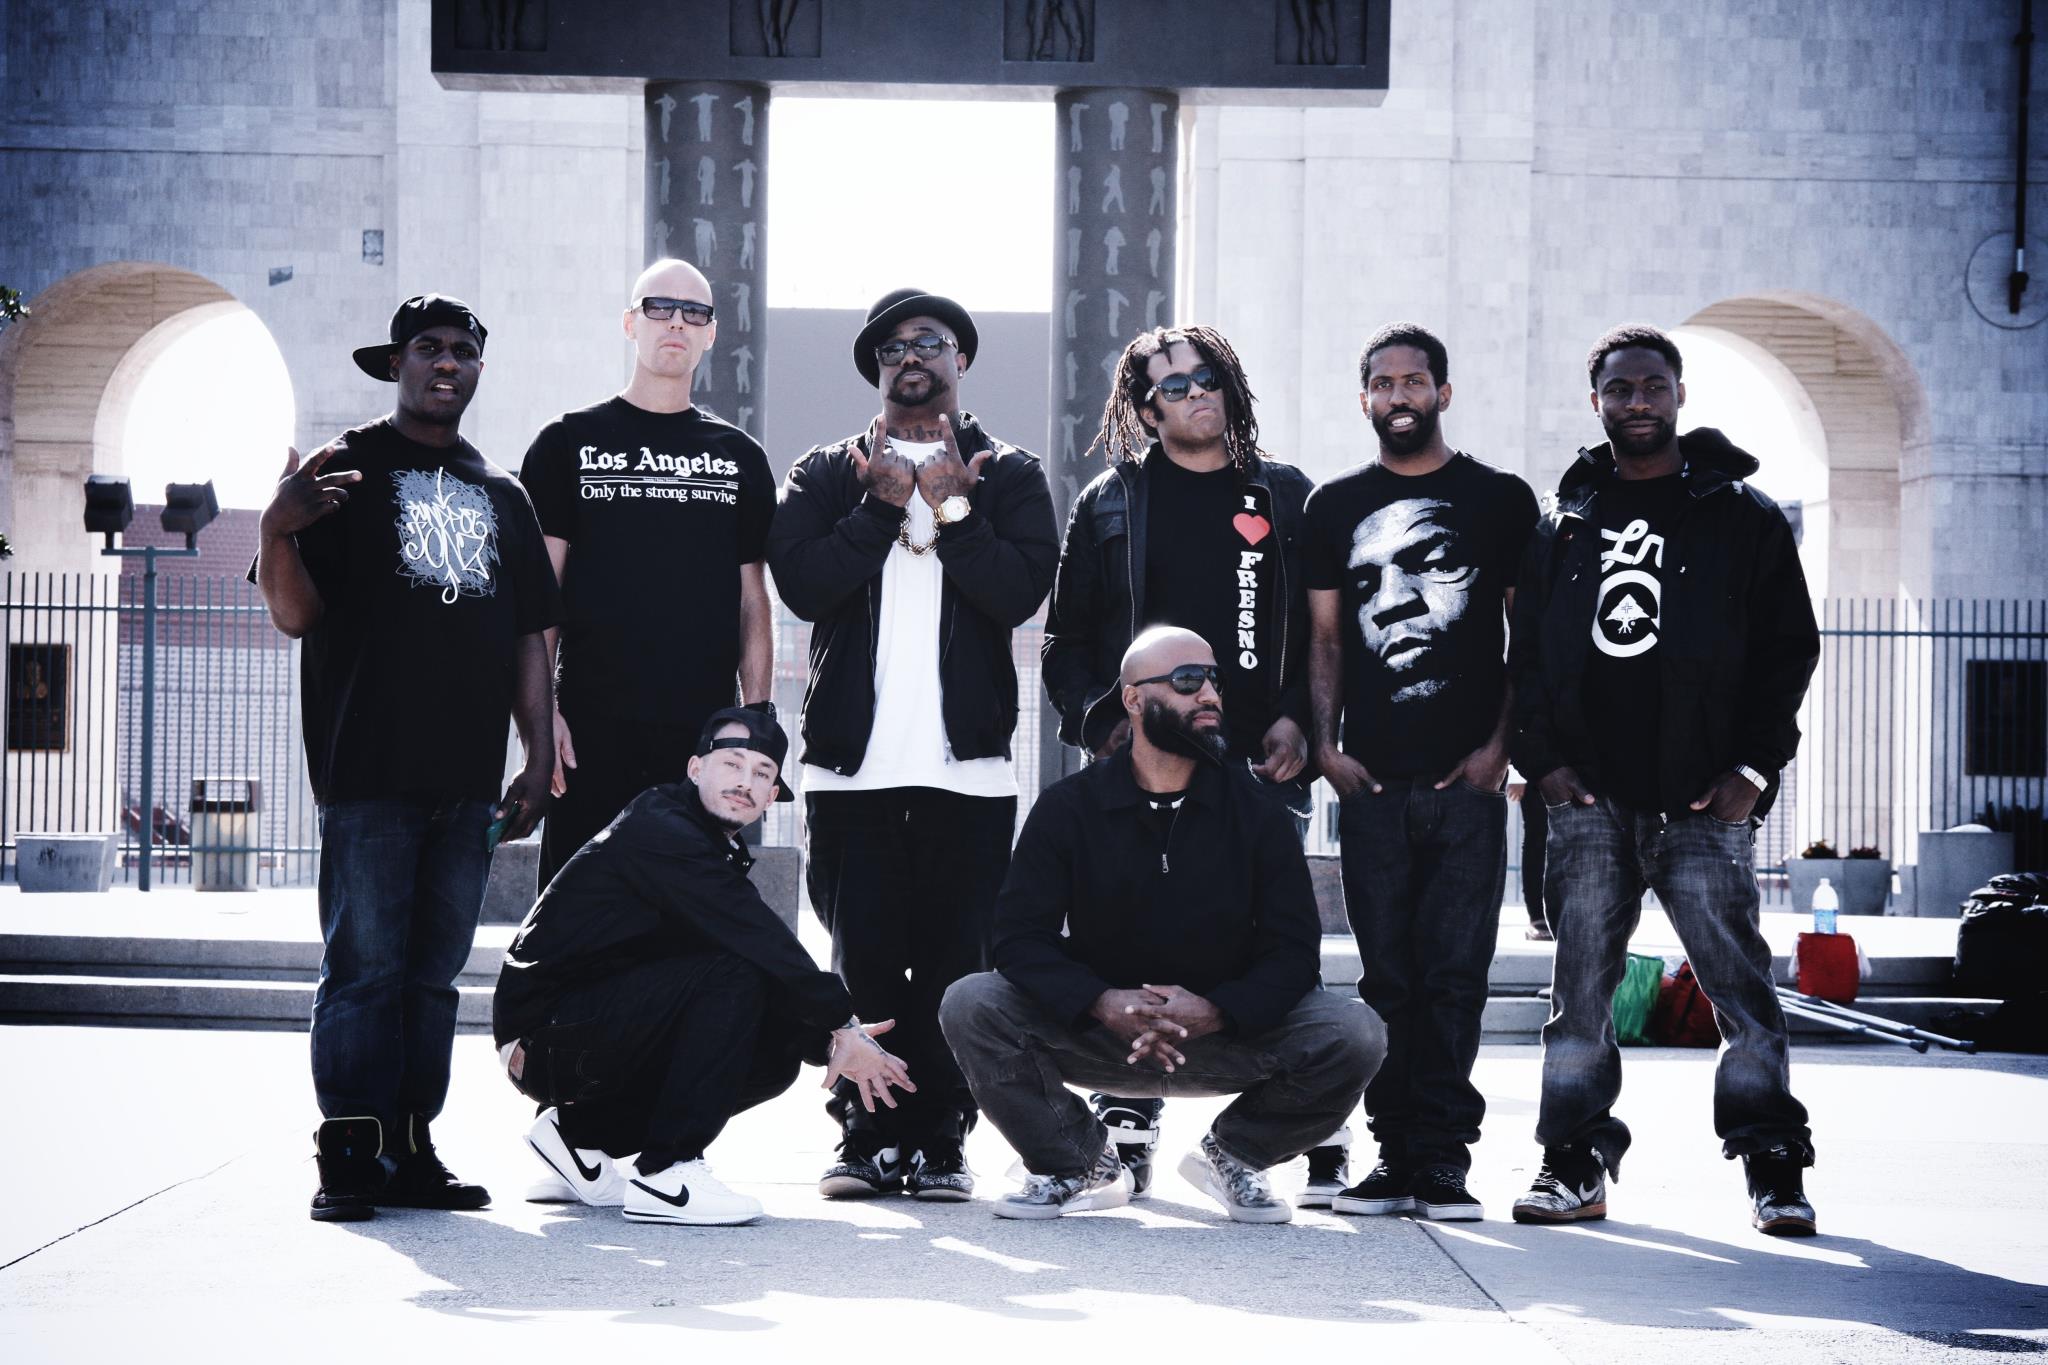 List: 5 Hip hop groups that quietly shaped how hip hop sounds